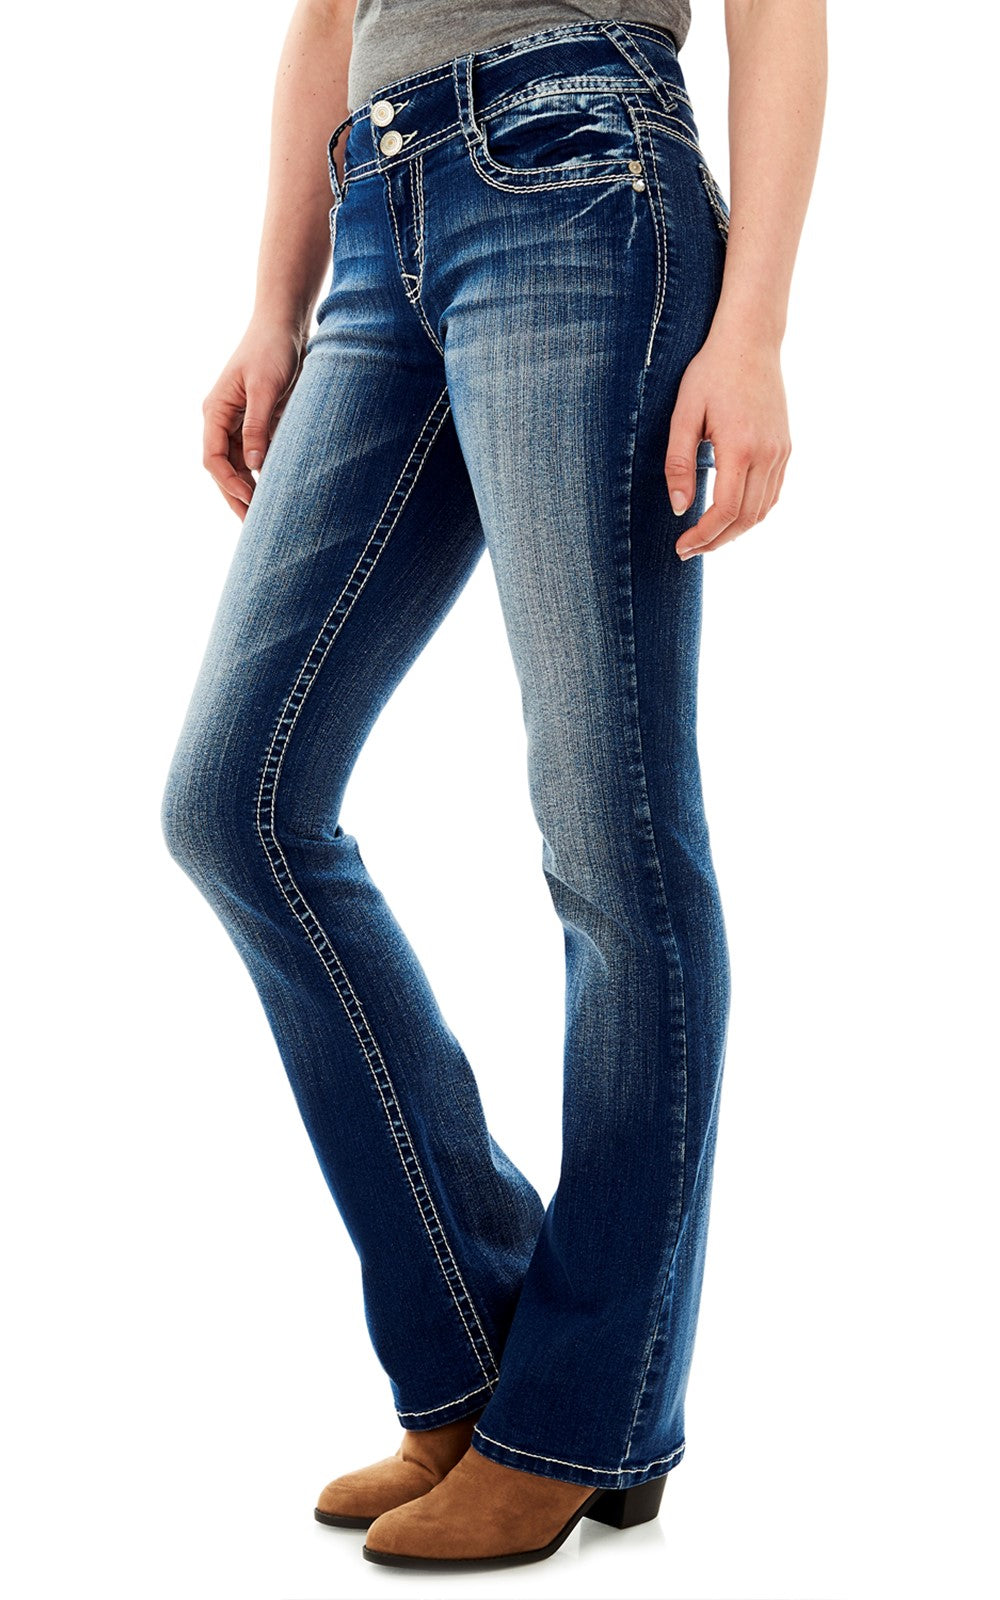 TWDYC Spring and Autumn Sexy High-waist Women Jeans Fashion Flower